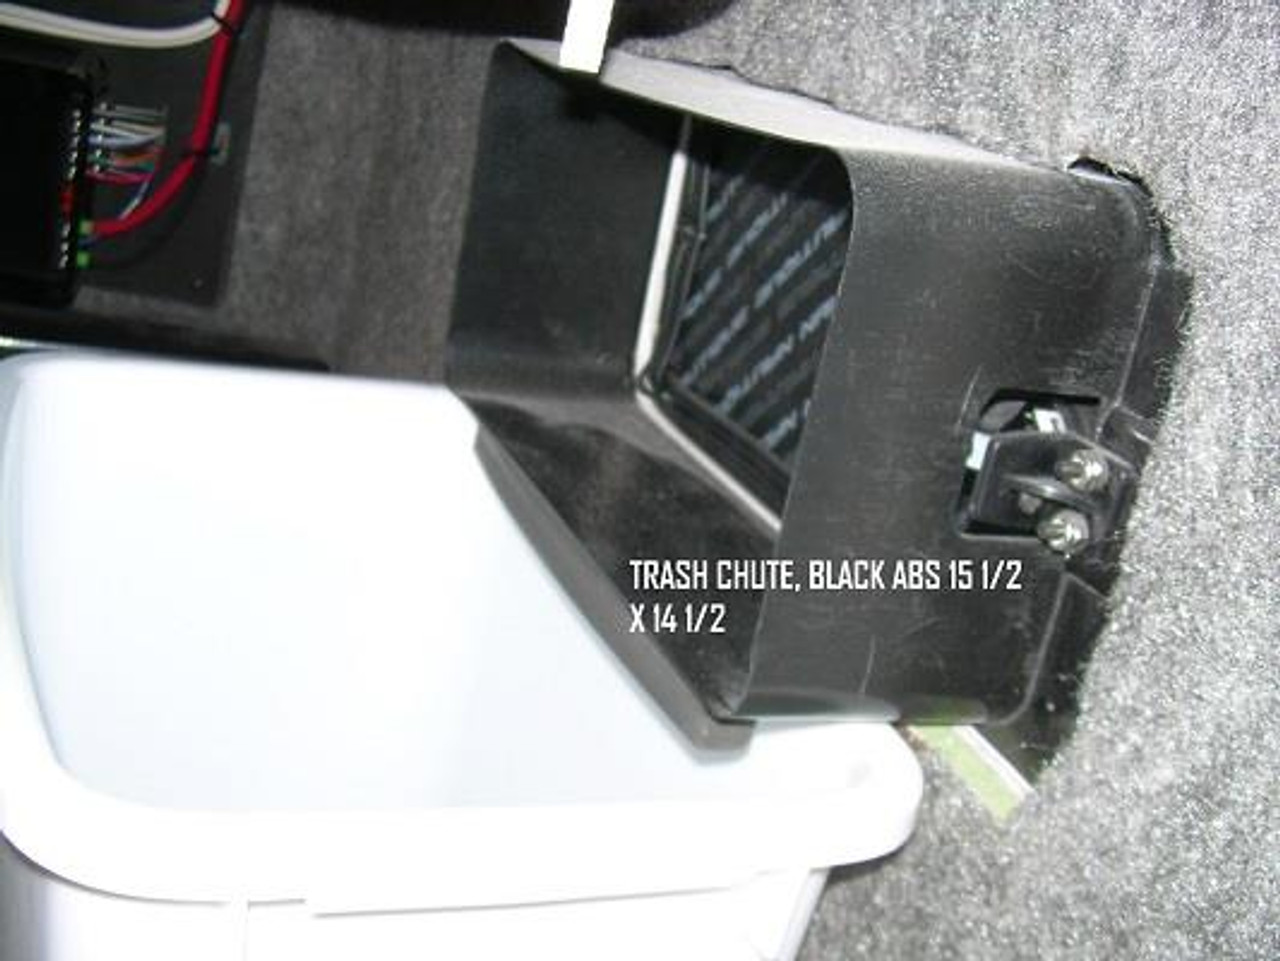 TRASH CHUTE BLACK ABS 15 1/2" 2013-2014 G-Series